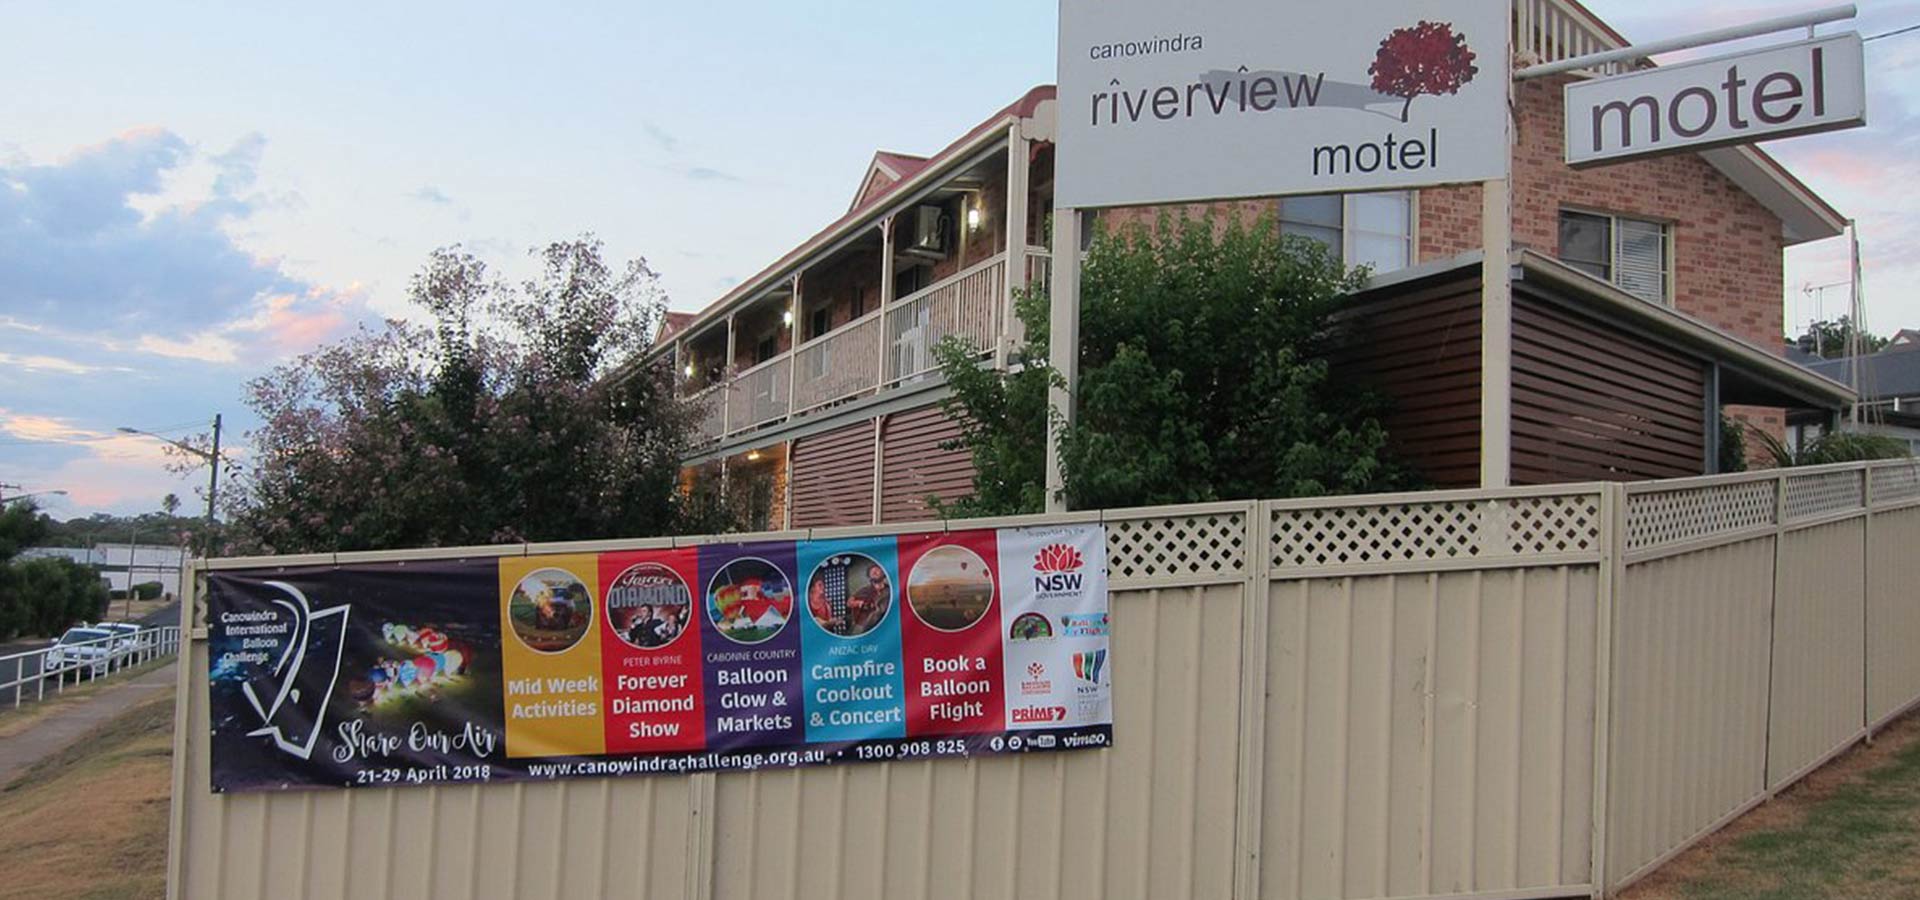 Canowindra Riverview Motel